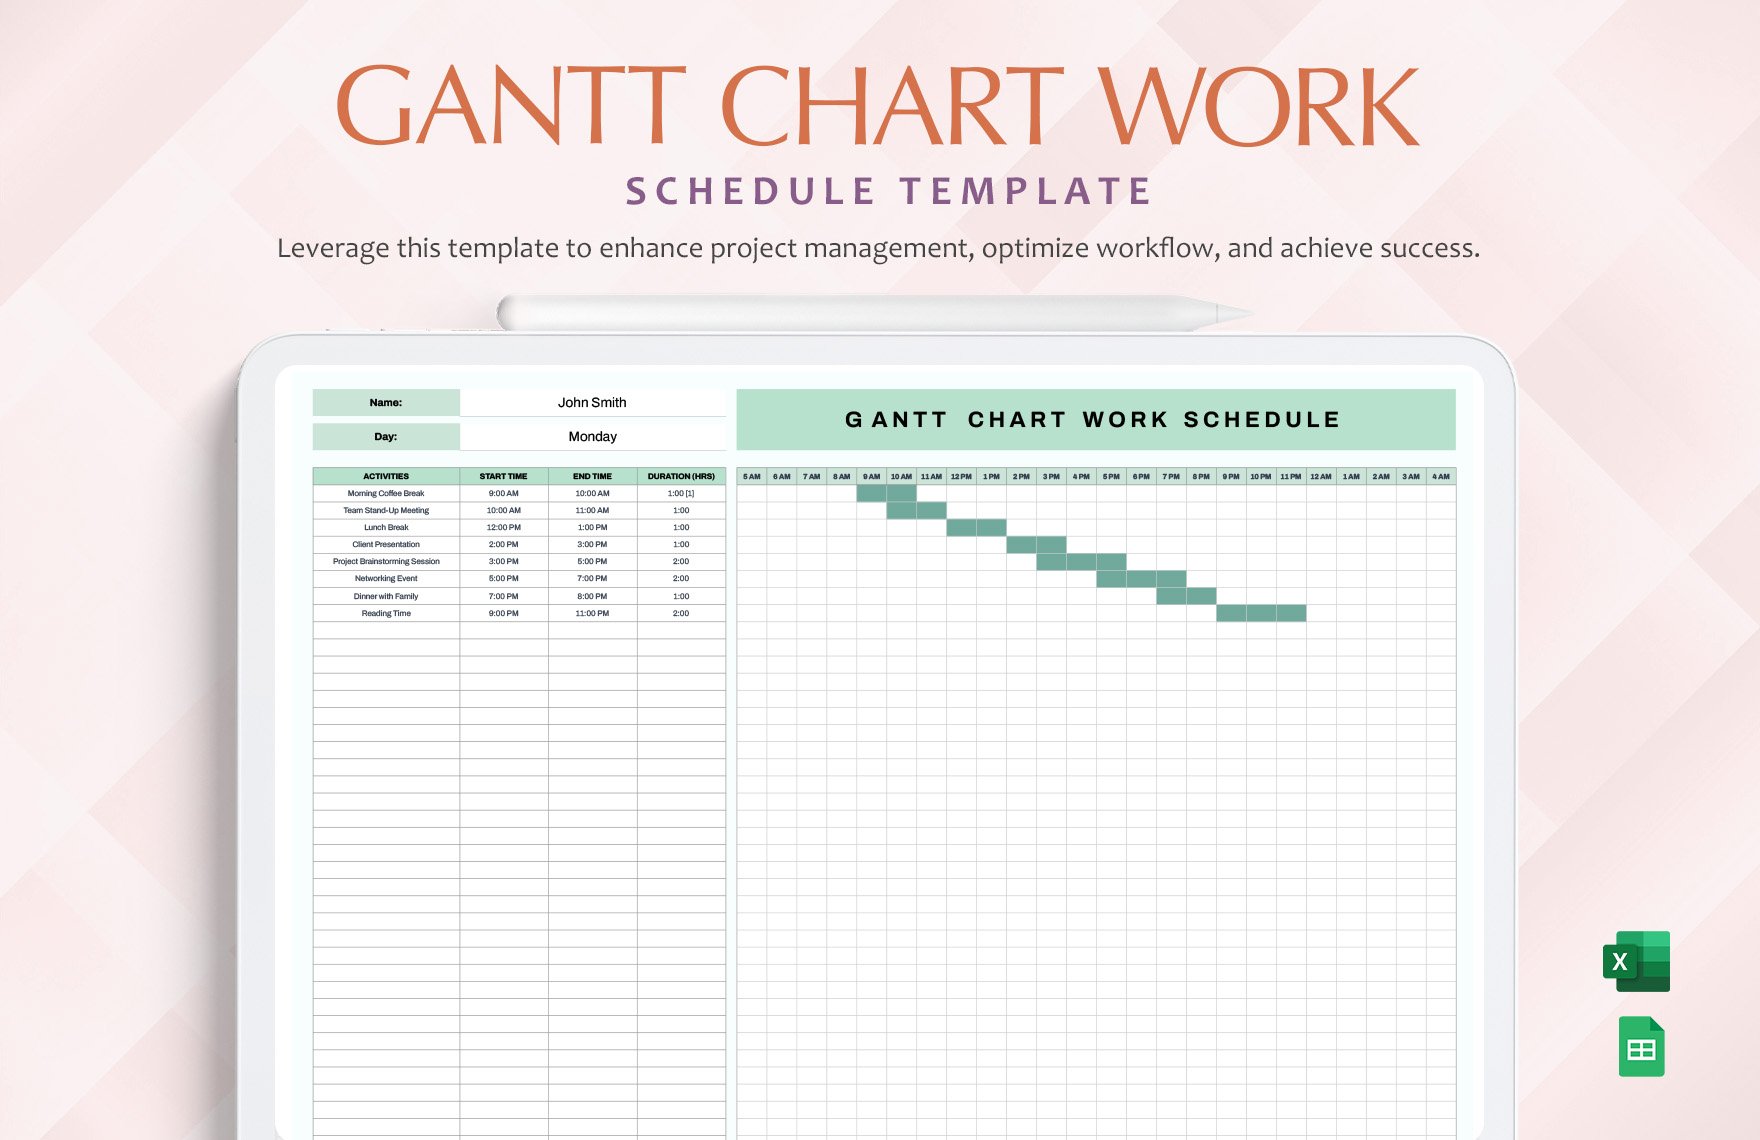 Gantt Chart Work Schedule Template in Excel, Google Sheets